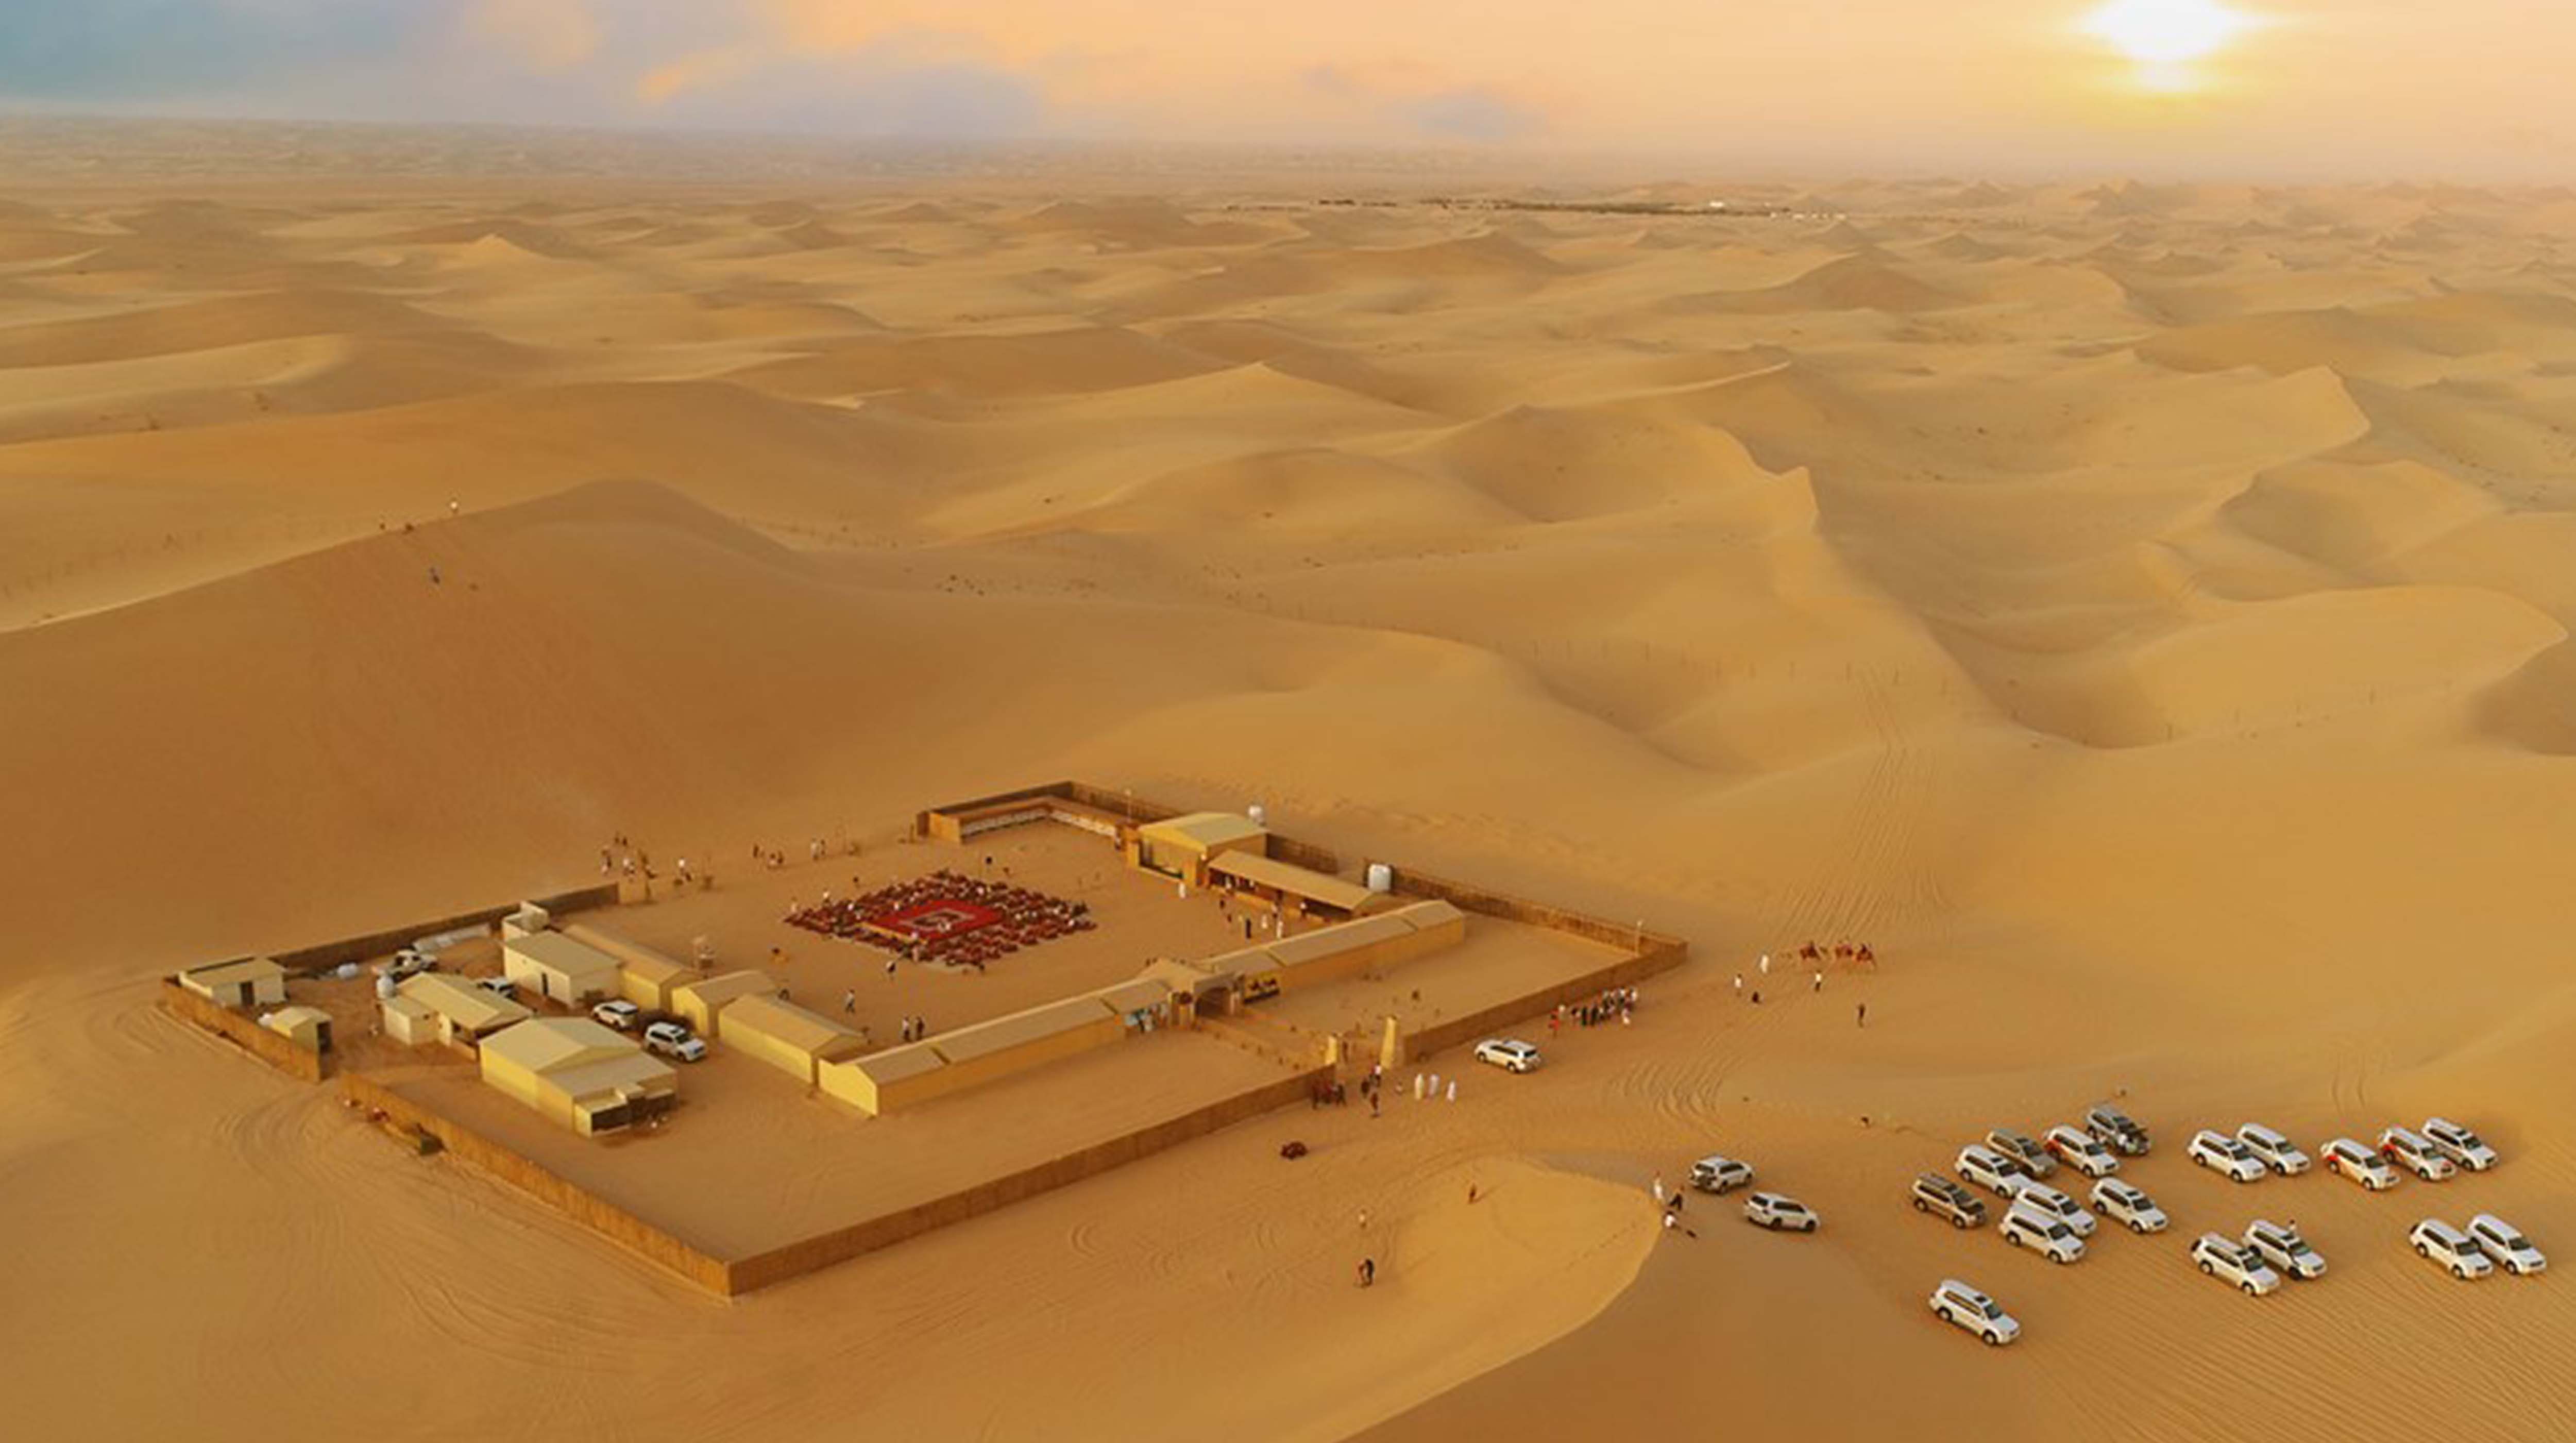 4. Esperienze beduine nel deserto